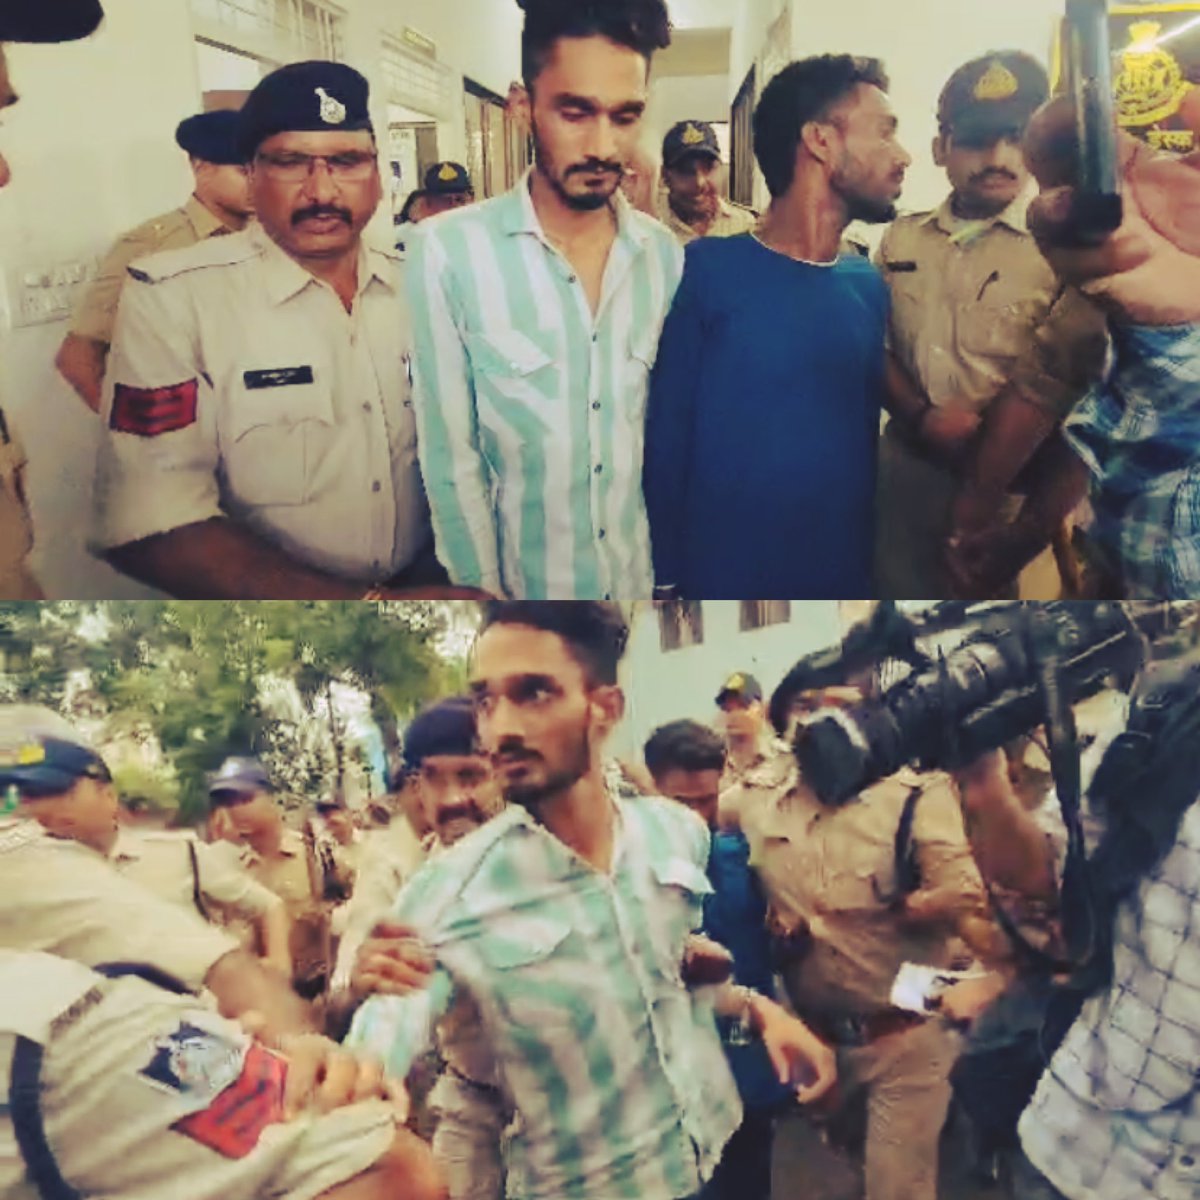 Kuttagiri karoge to MP Police ke aage kutta bannna padega na meri jaan. #Bhopal